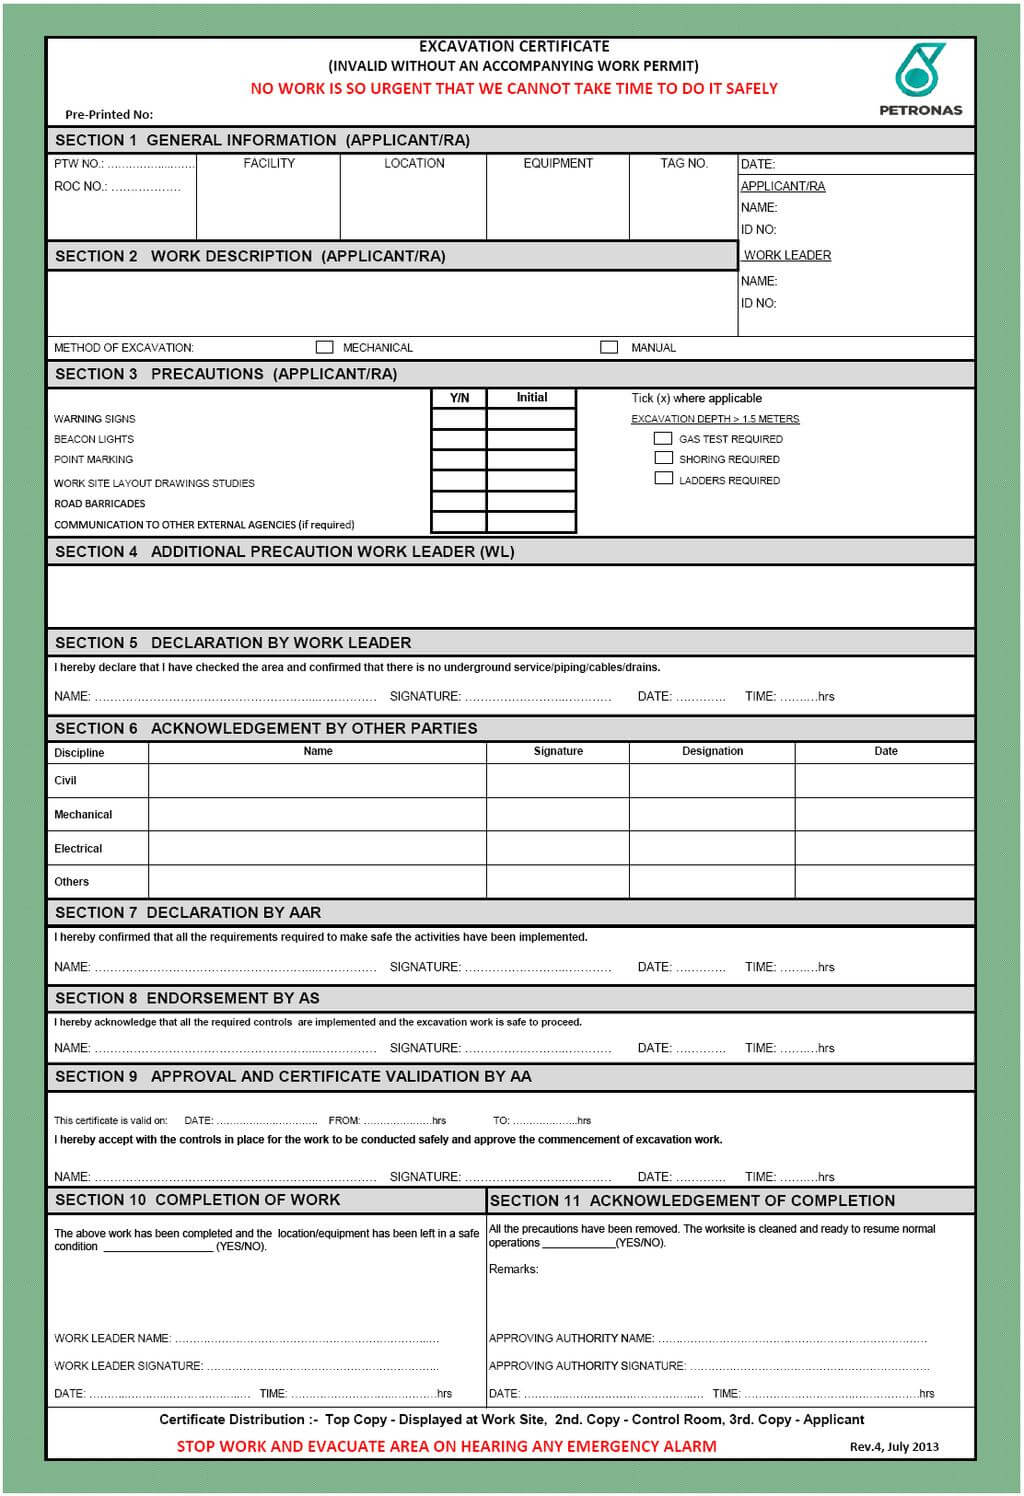 Petronas Carigali Permit To Work Procedure Petronas Carigali With Electrical Isolation Certificate Template